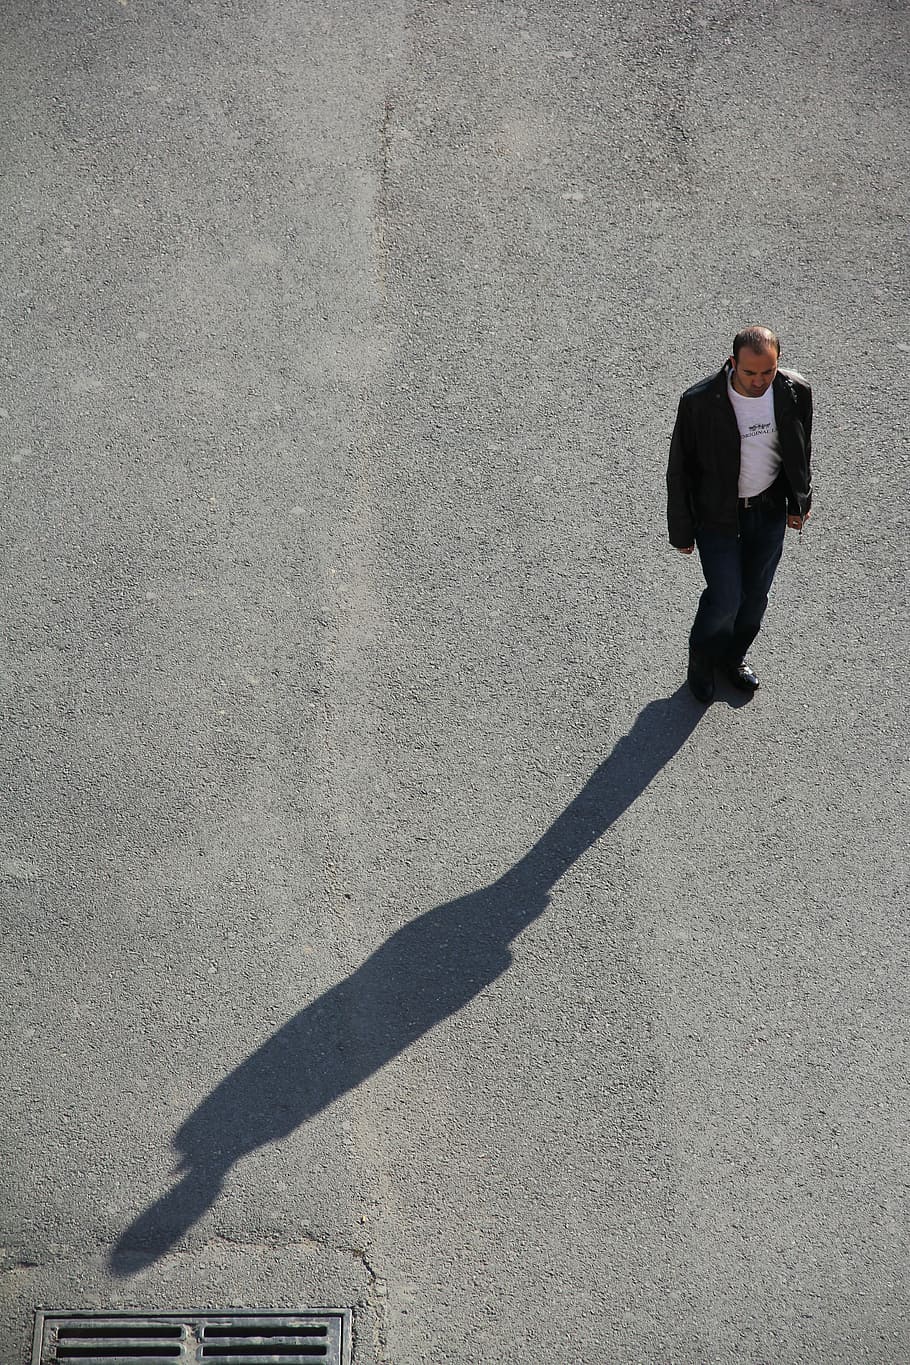 Human, Shadow, Only, Road, Istanbul, road, street, shadows, walk, businessman, business